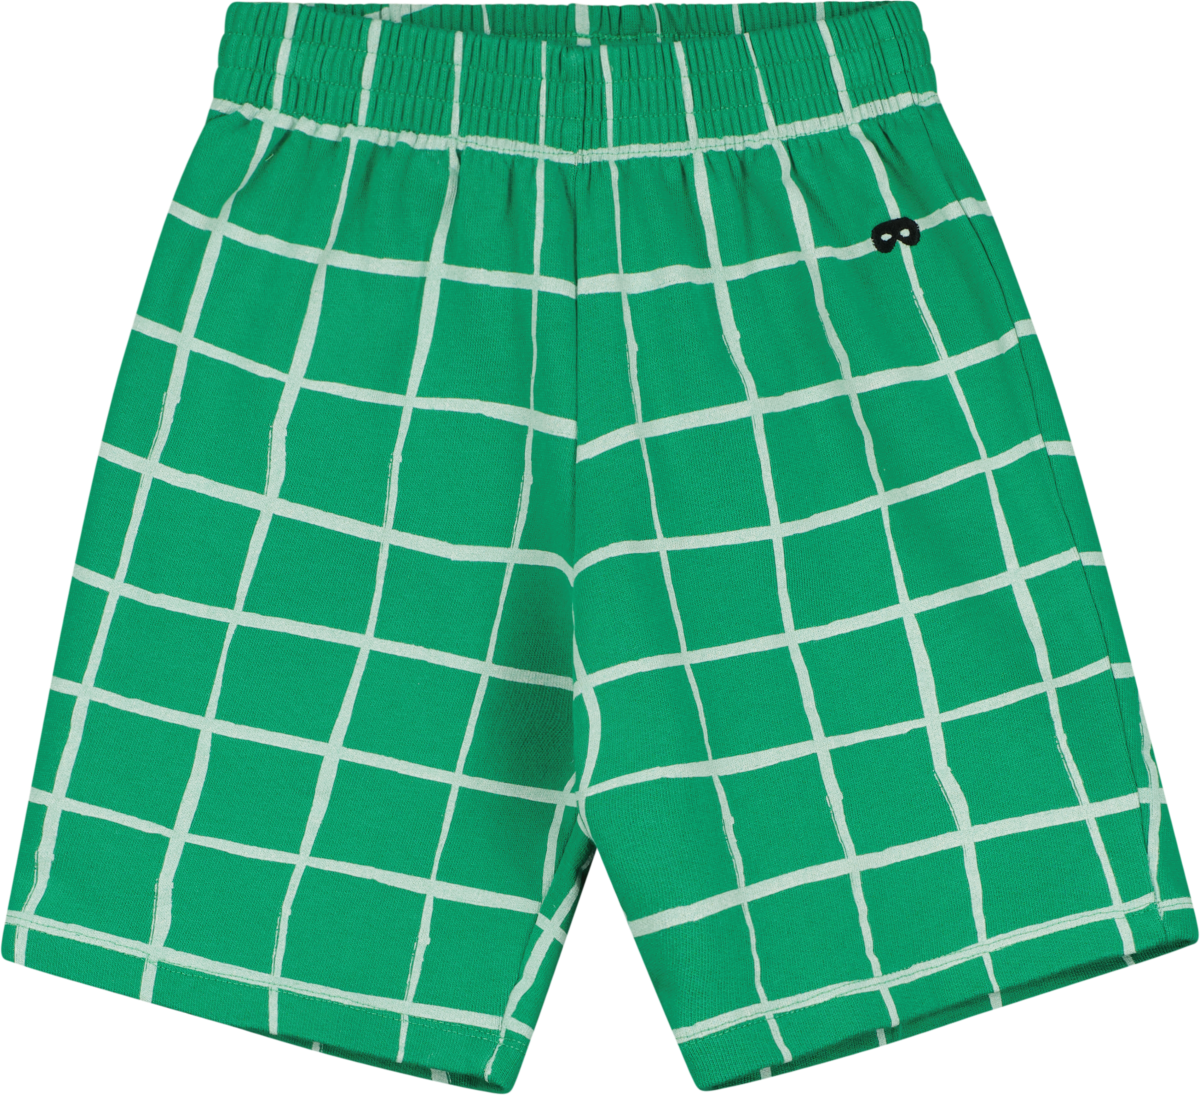 Kelly Green Grid Shorts